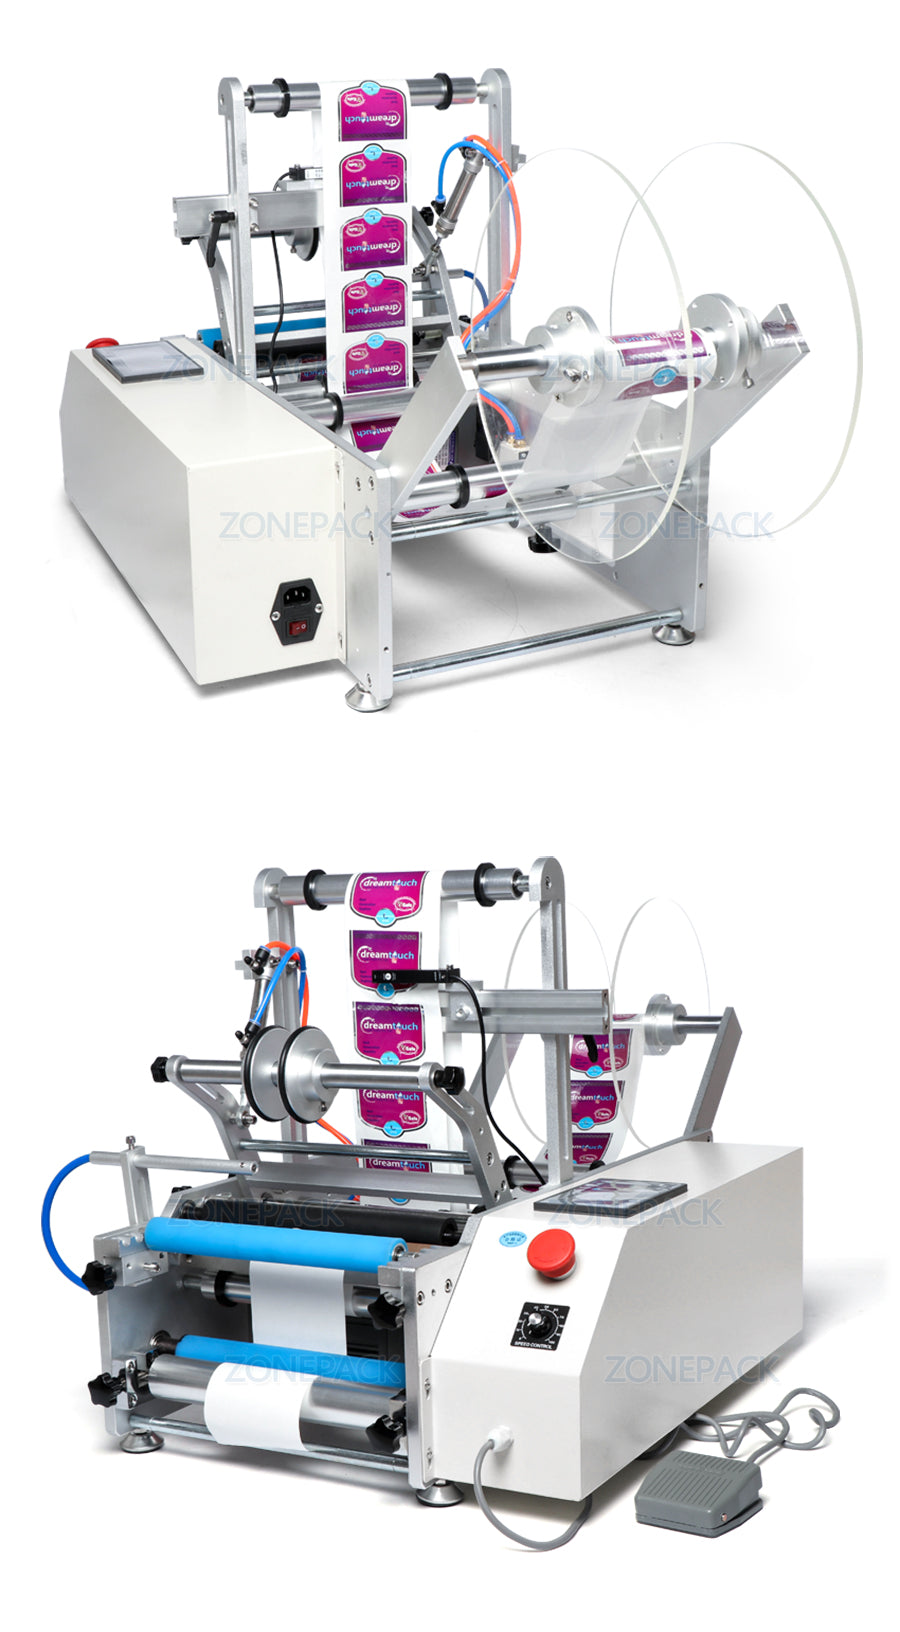 ZONESUN XL-T801 Semi-automatic  Round Bottle Labeling Machine